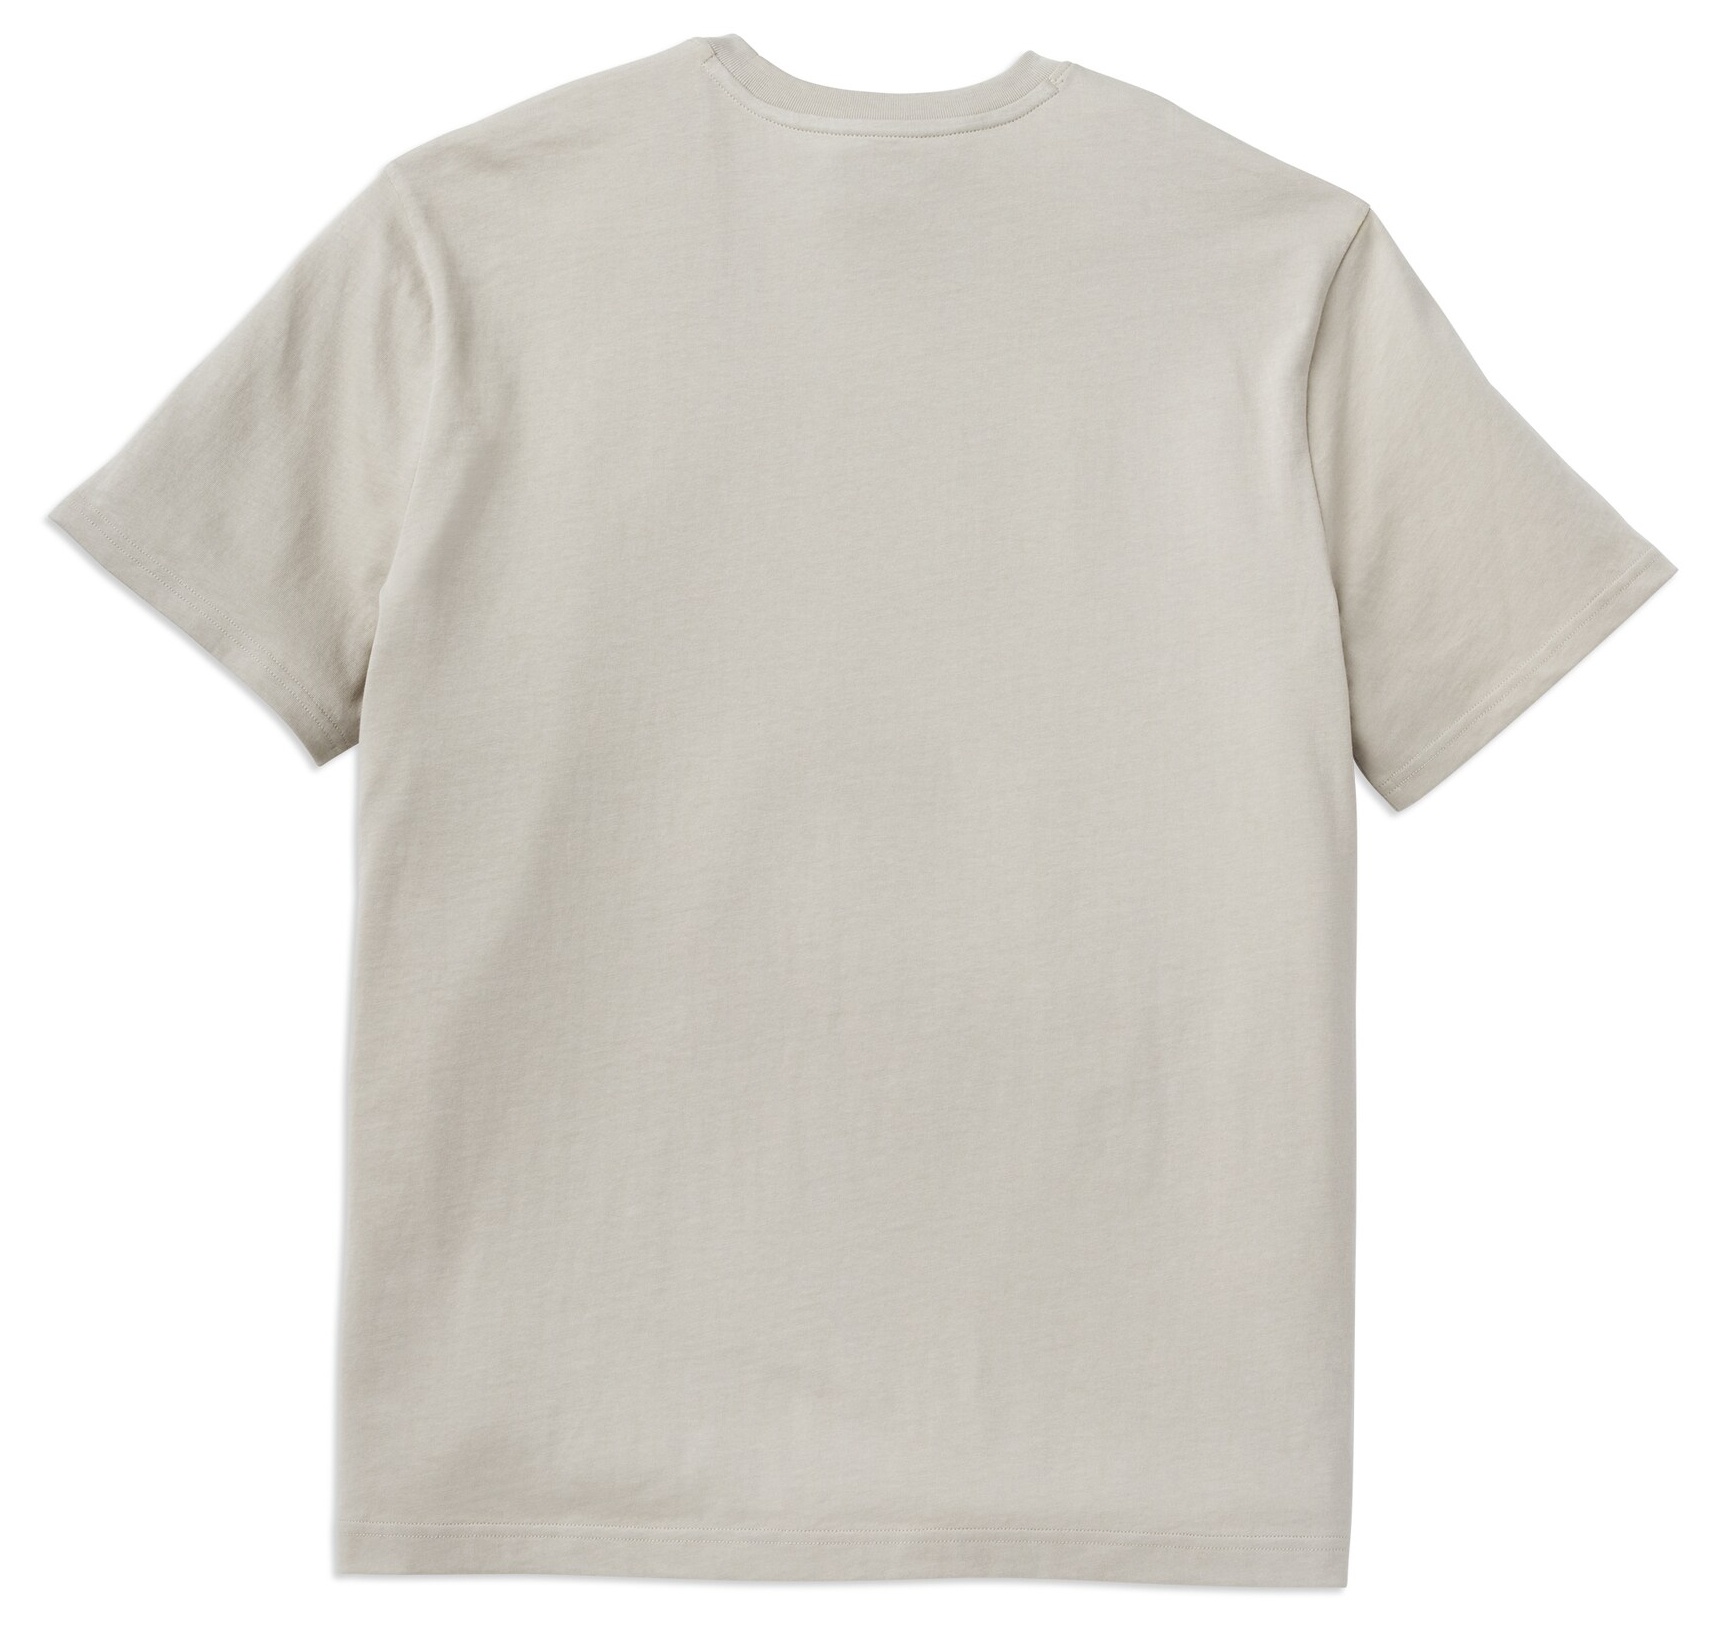 T-Shirt Tee Shirt Gildan Free Sticker S M L XL 2XL 3XL Cotton Got Nitro 